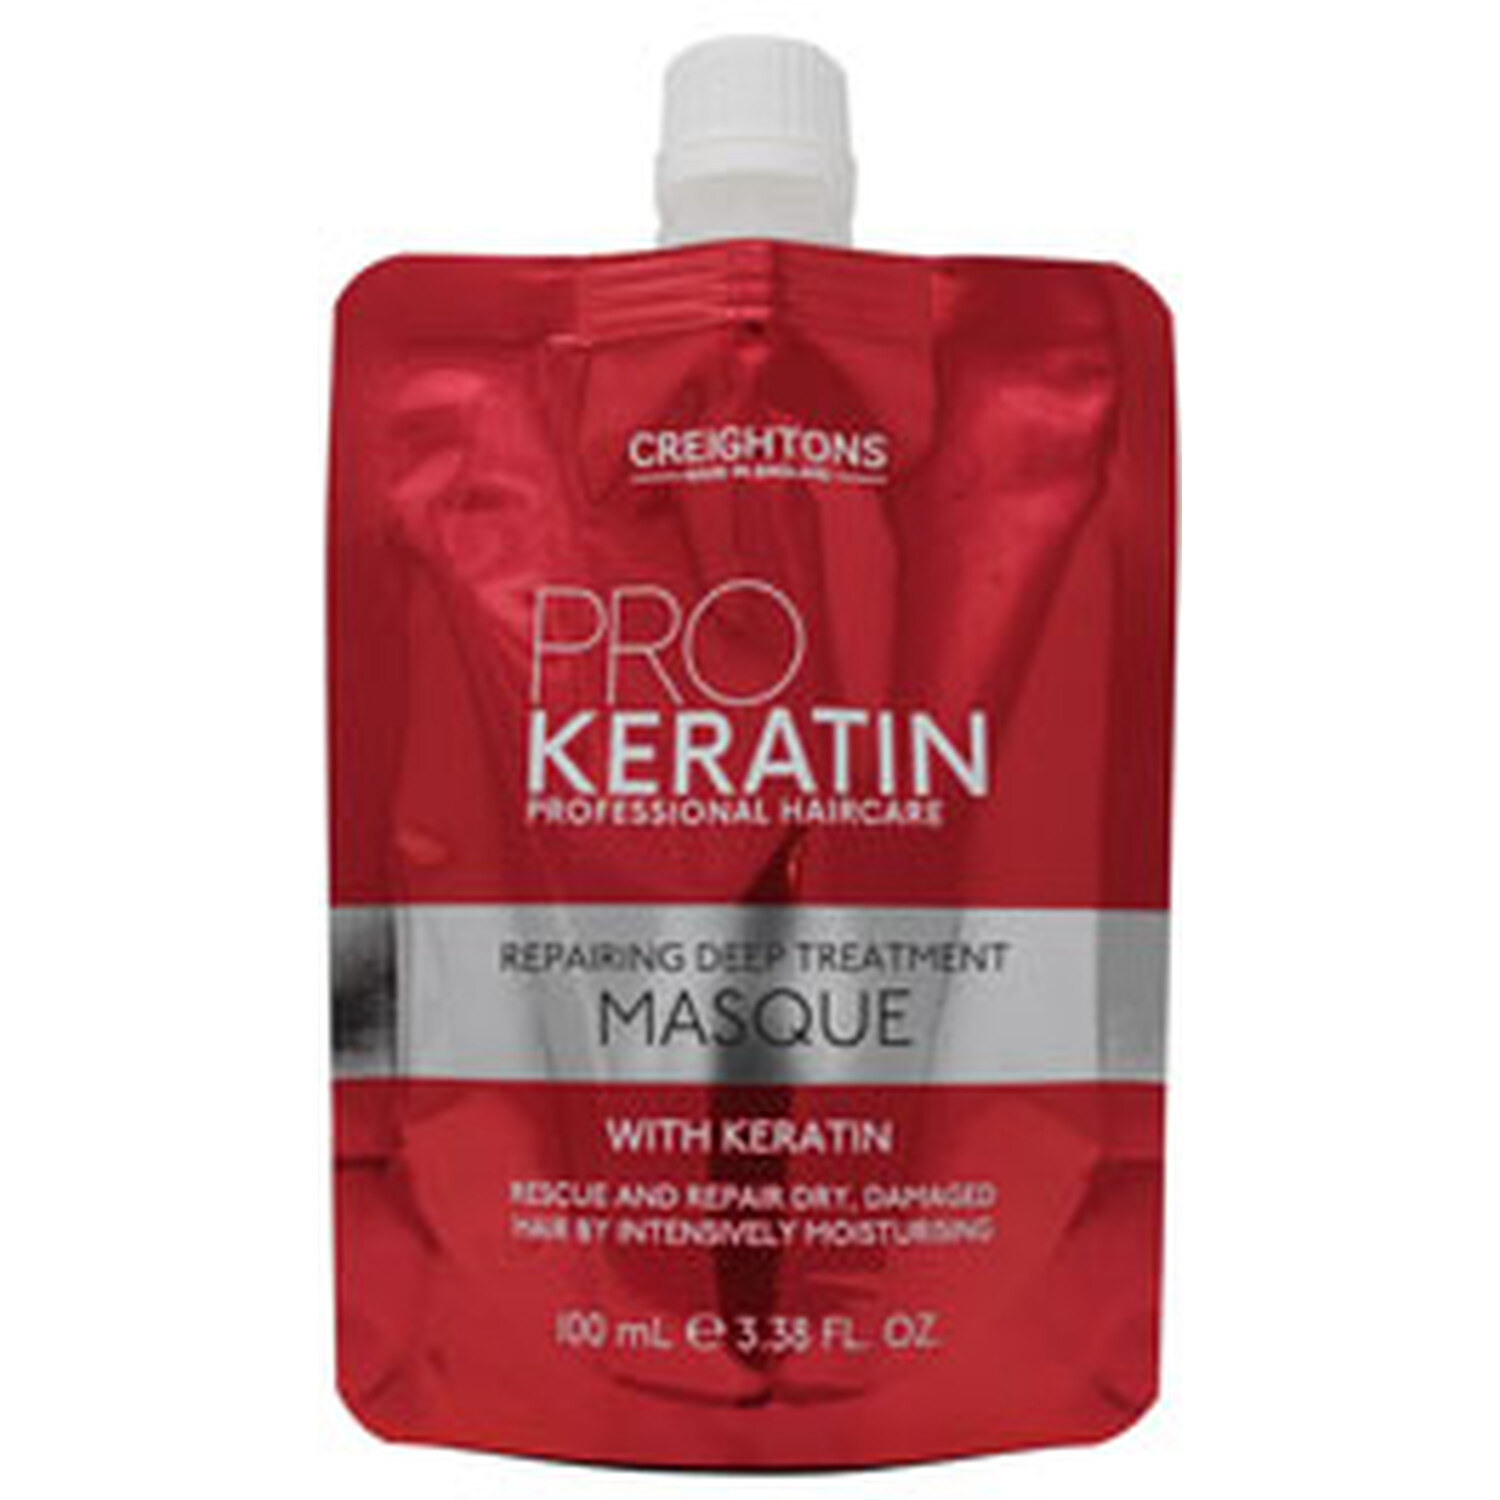 Creightons Pro-Keratin Repairing Deep Hair Treatment Masque 100ml Image